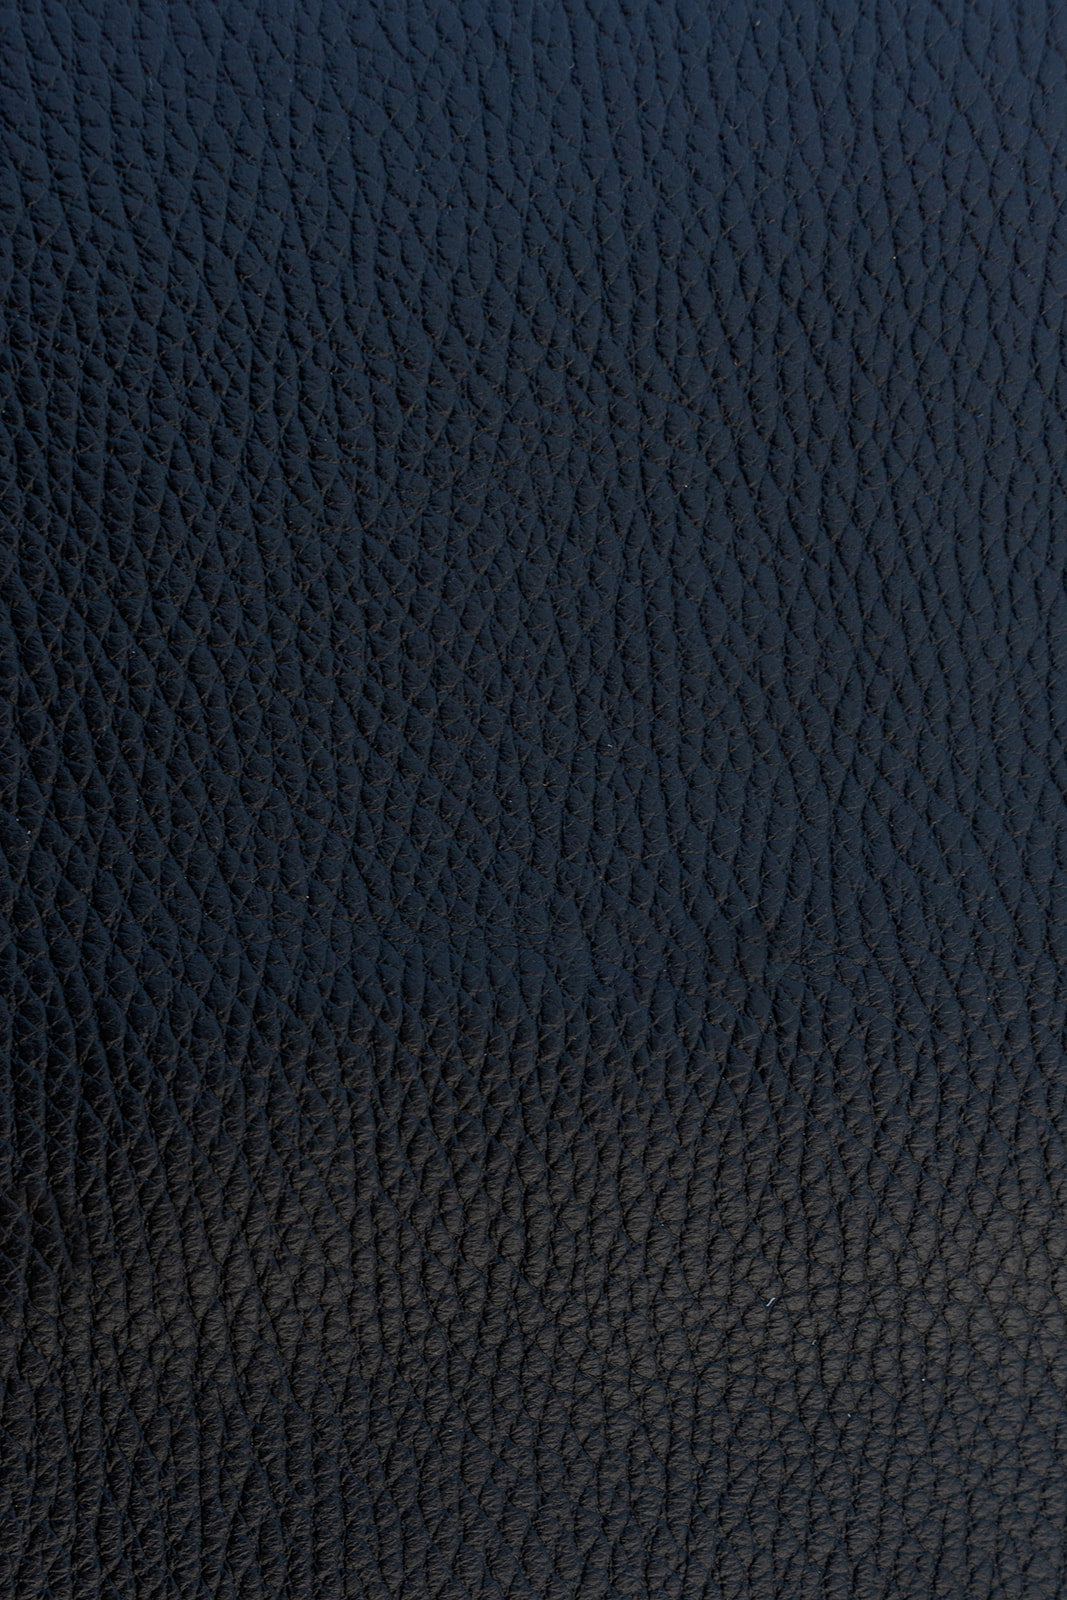 JL crossbody bag leather - Caviar black